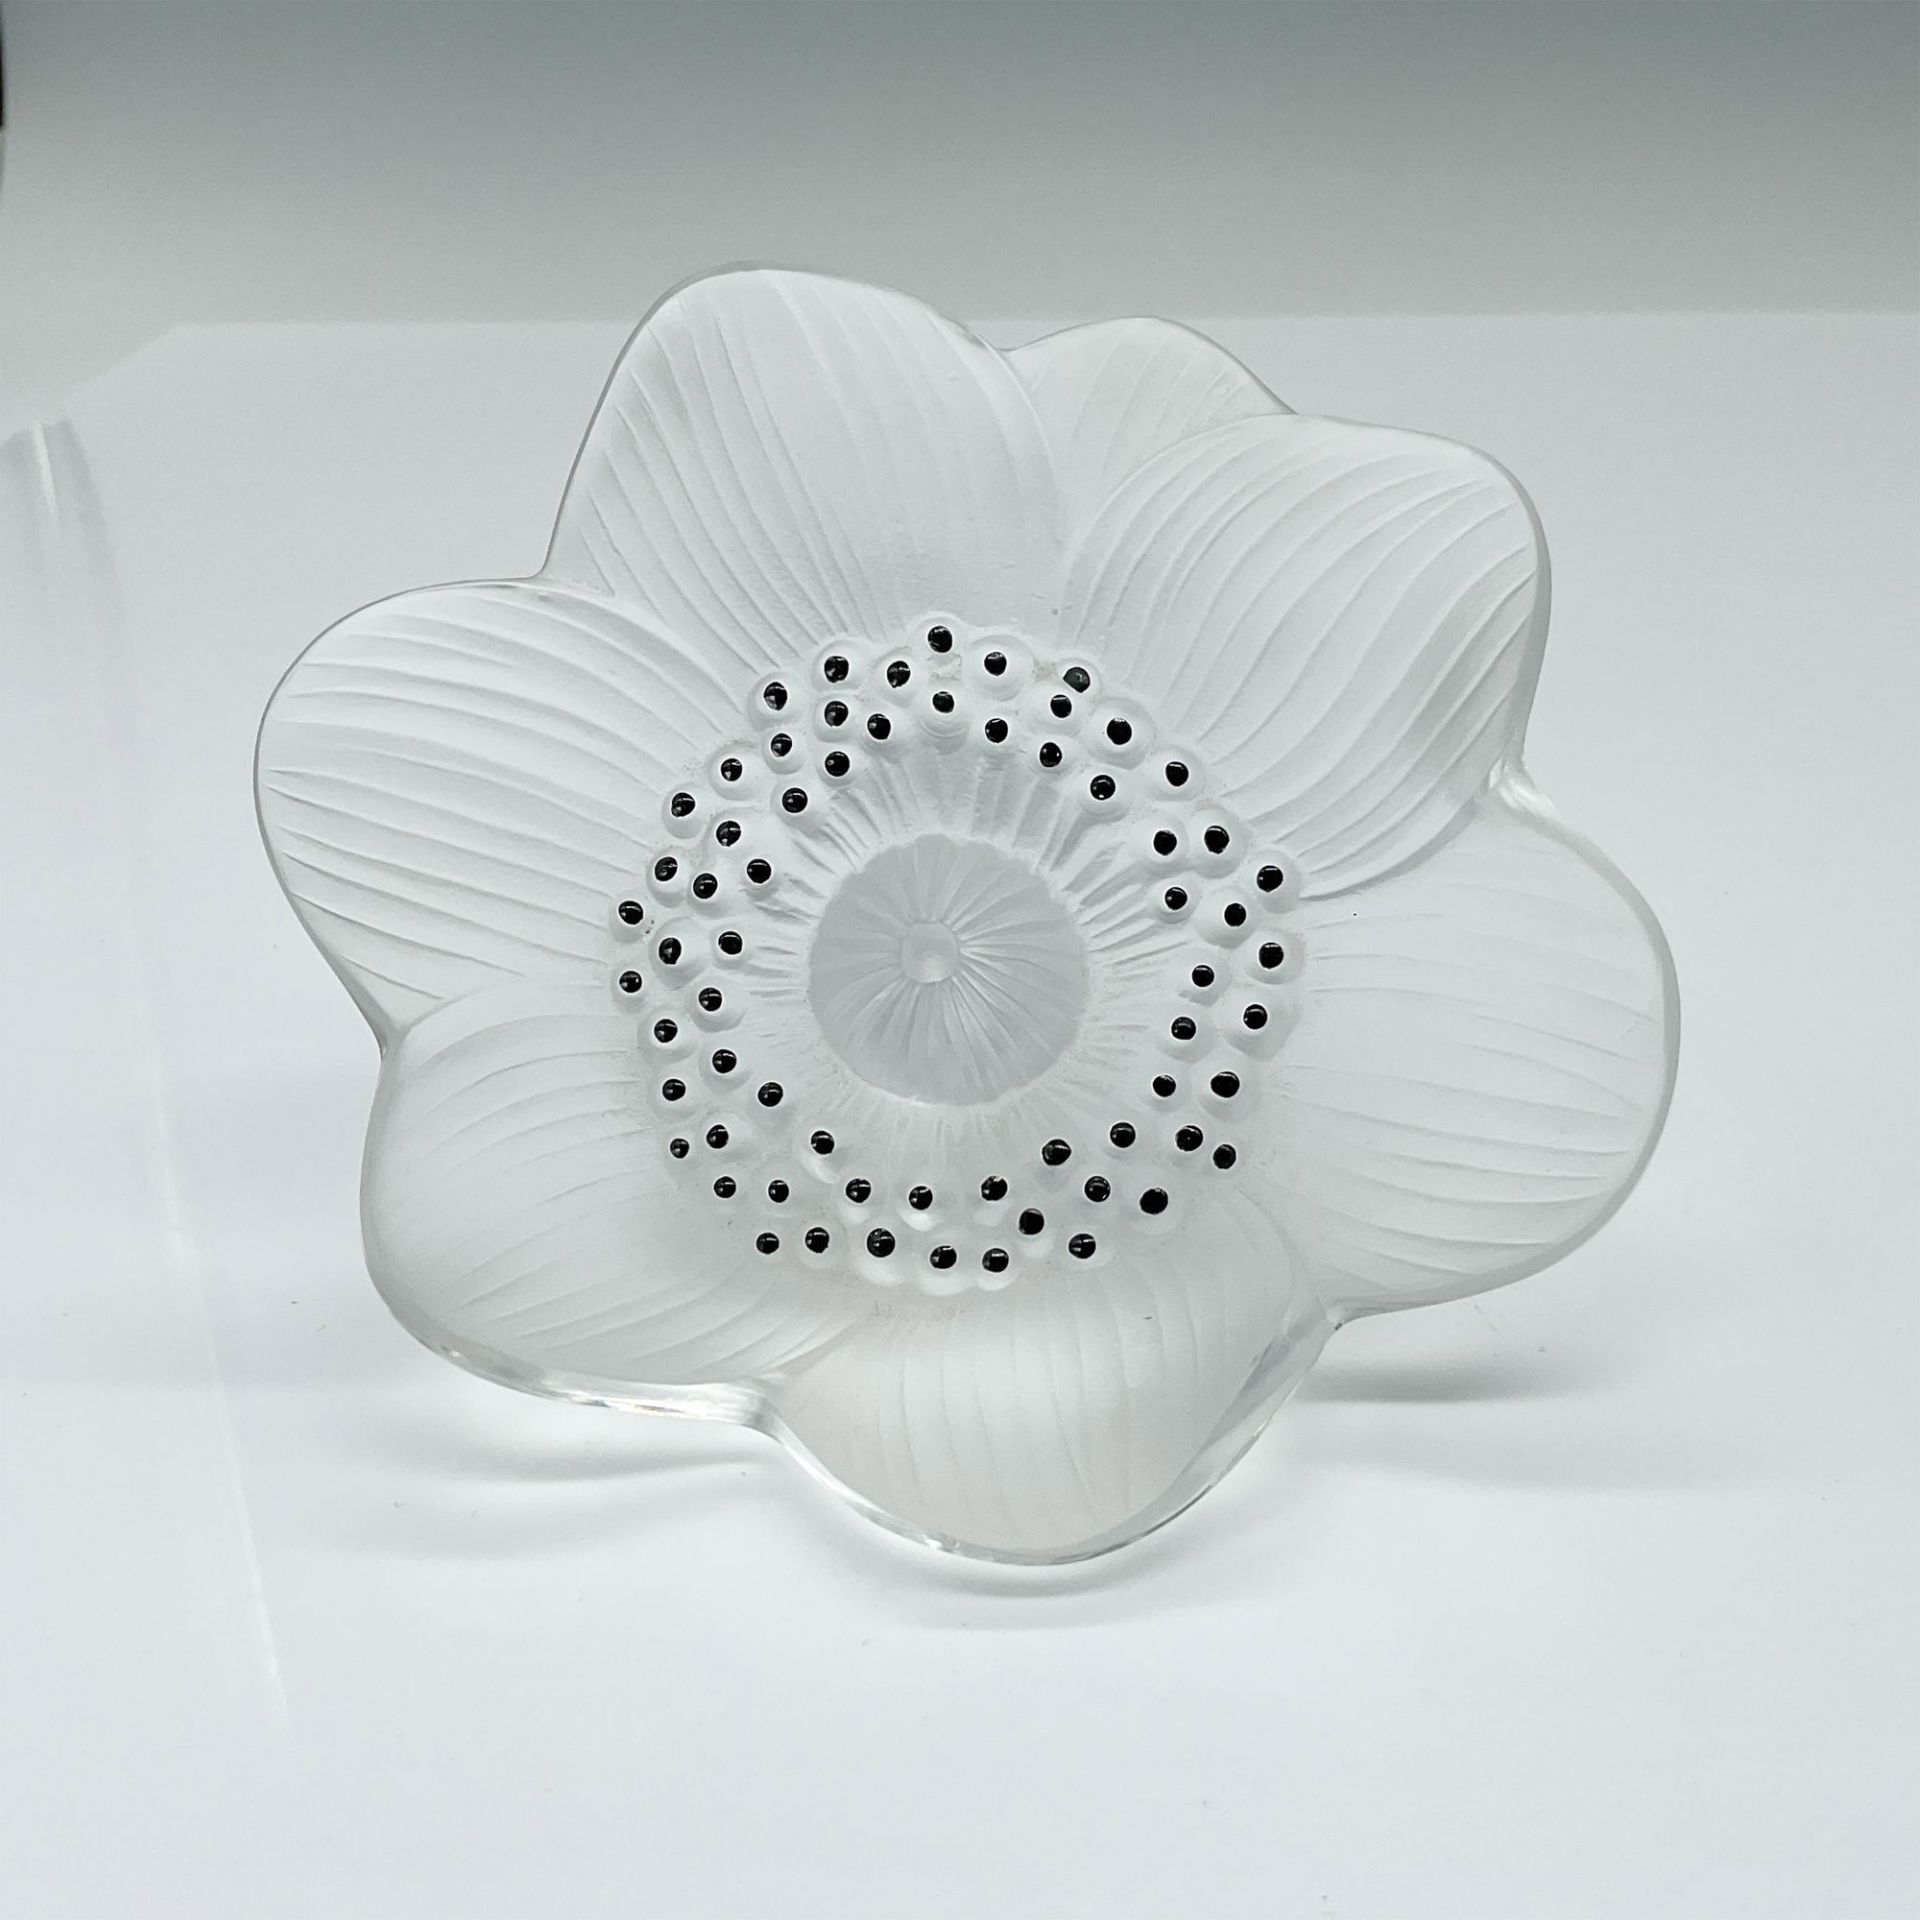 Lalique Crystal Flower Sculpture, Anemone